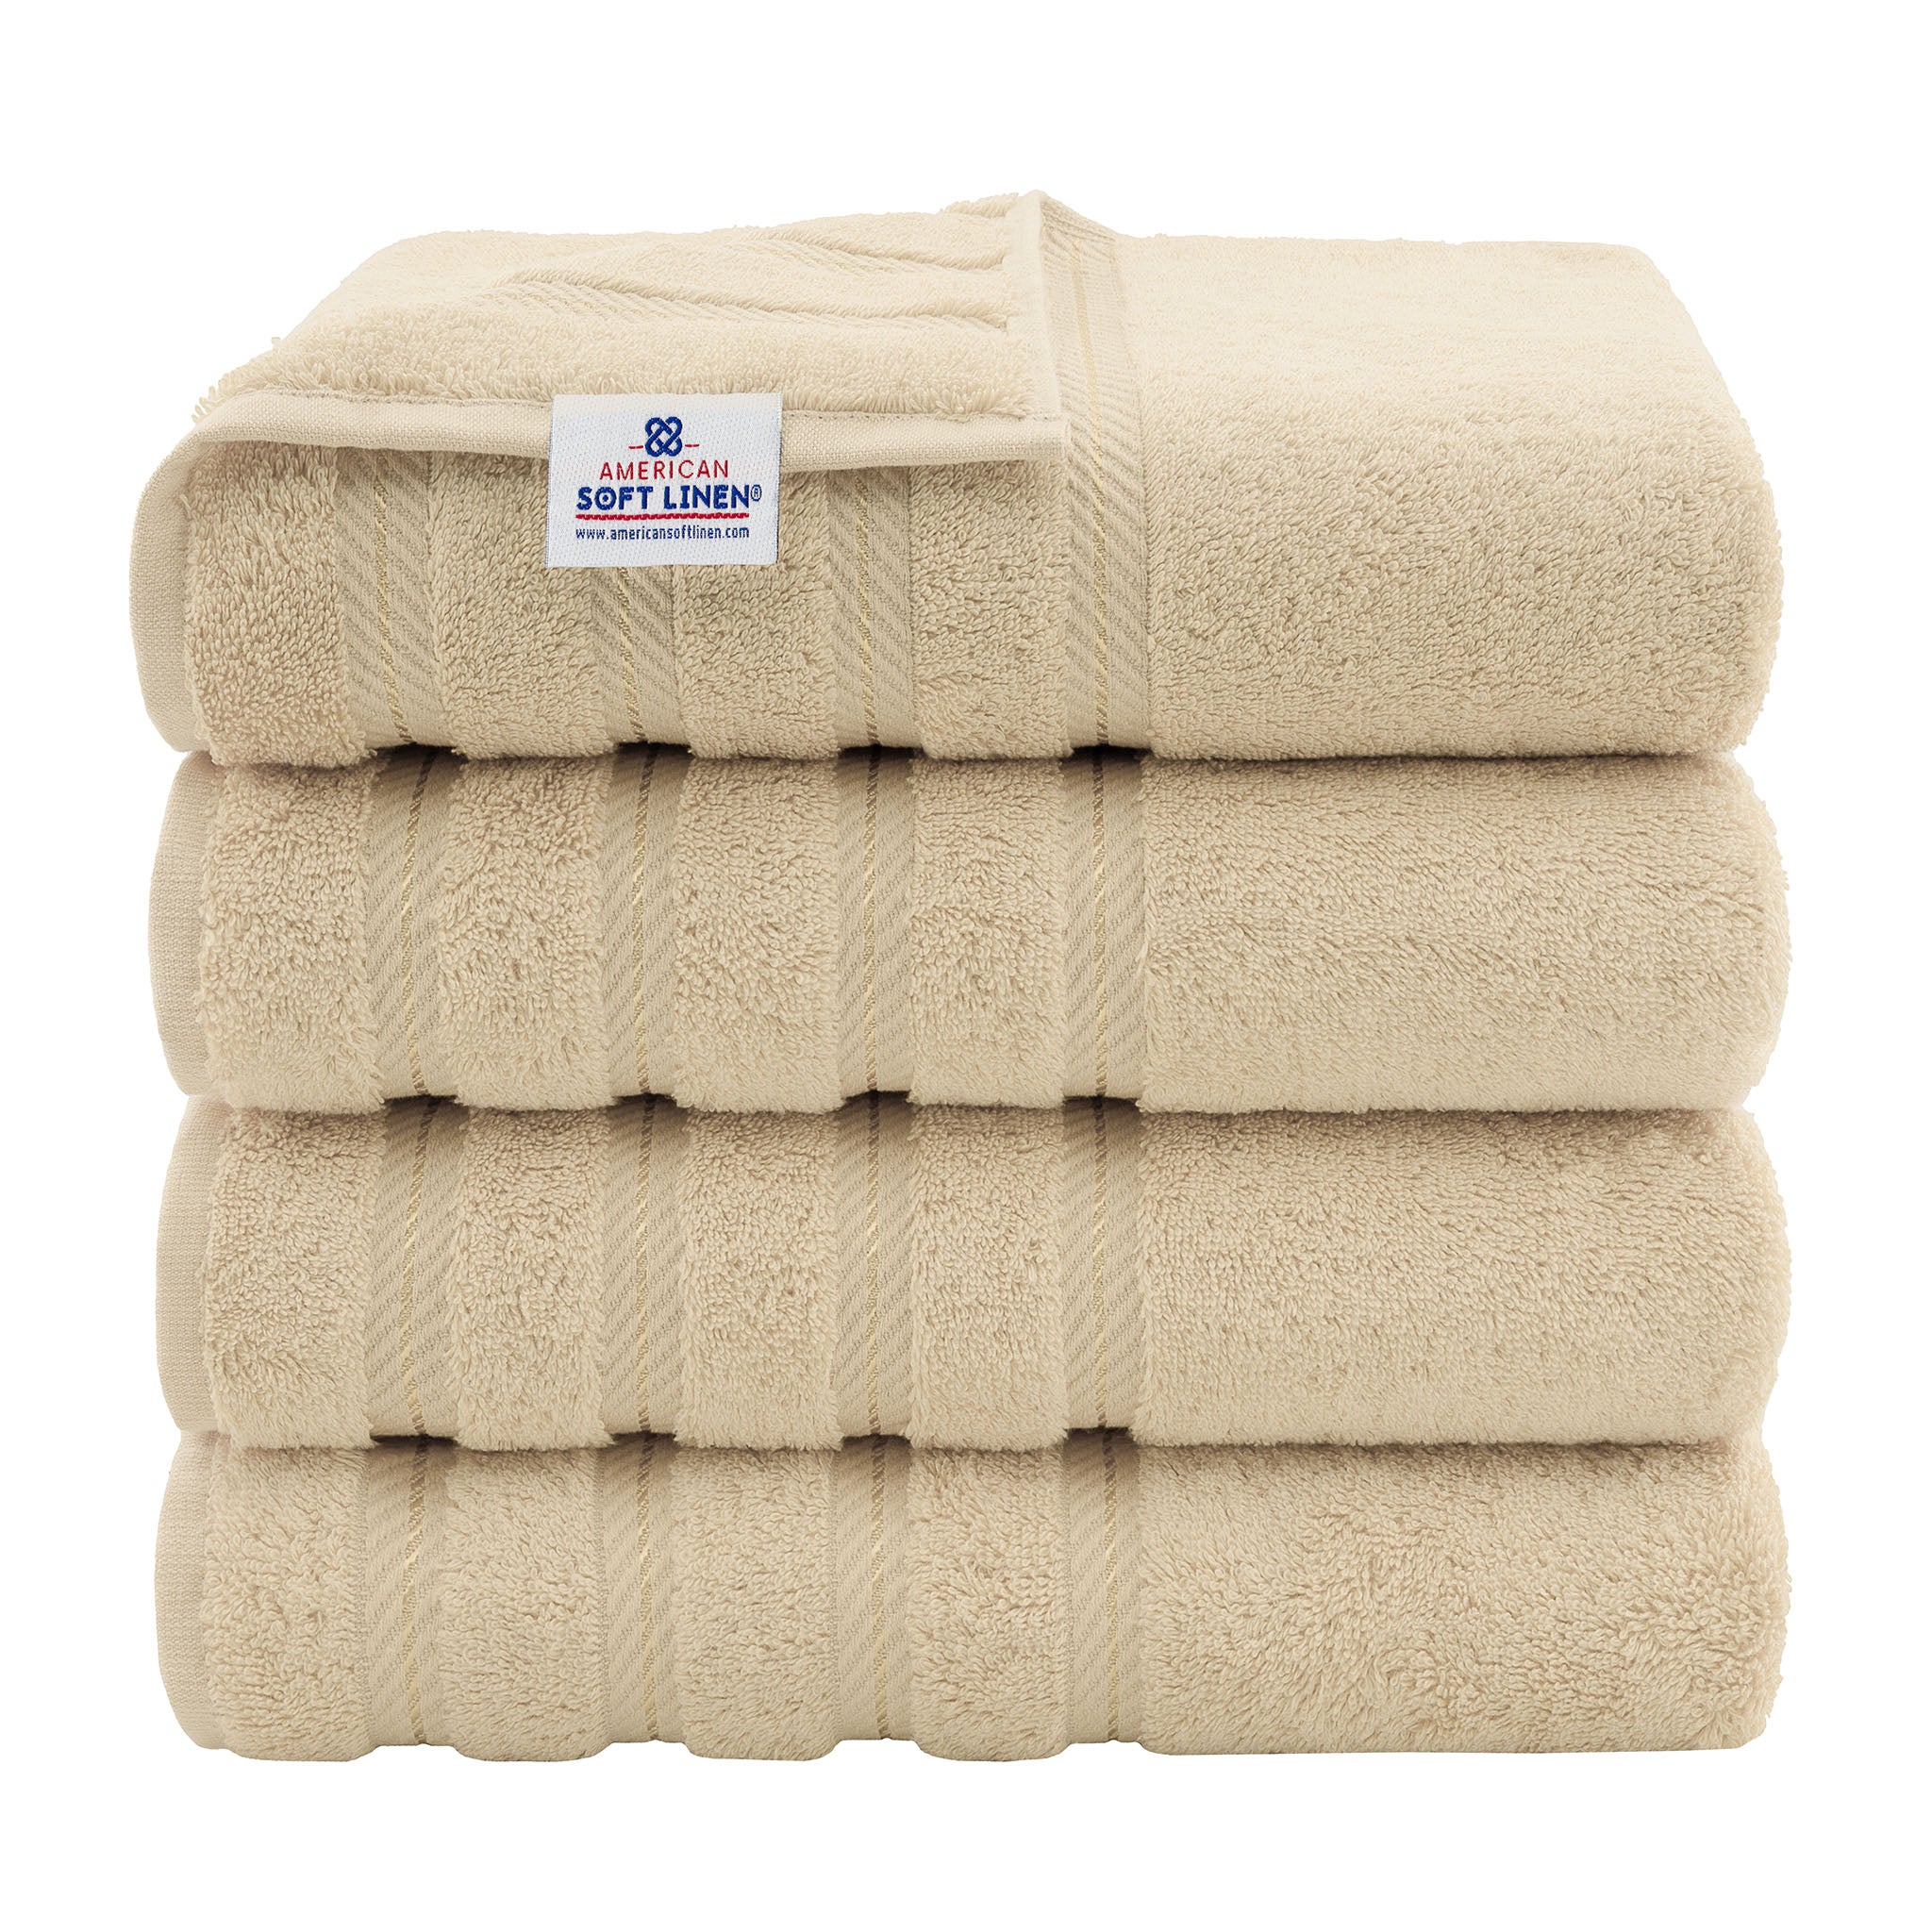 American Soft Linen 100% Turkish Cotton 4 Pack Bath Towel Set sand-taupe-1